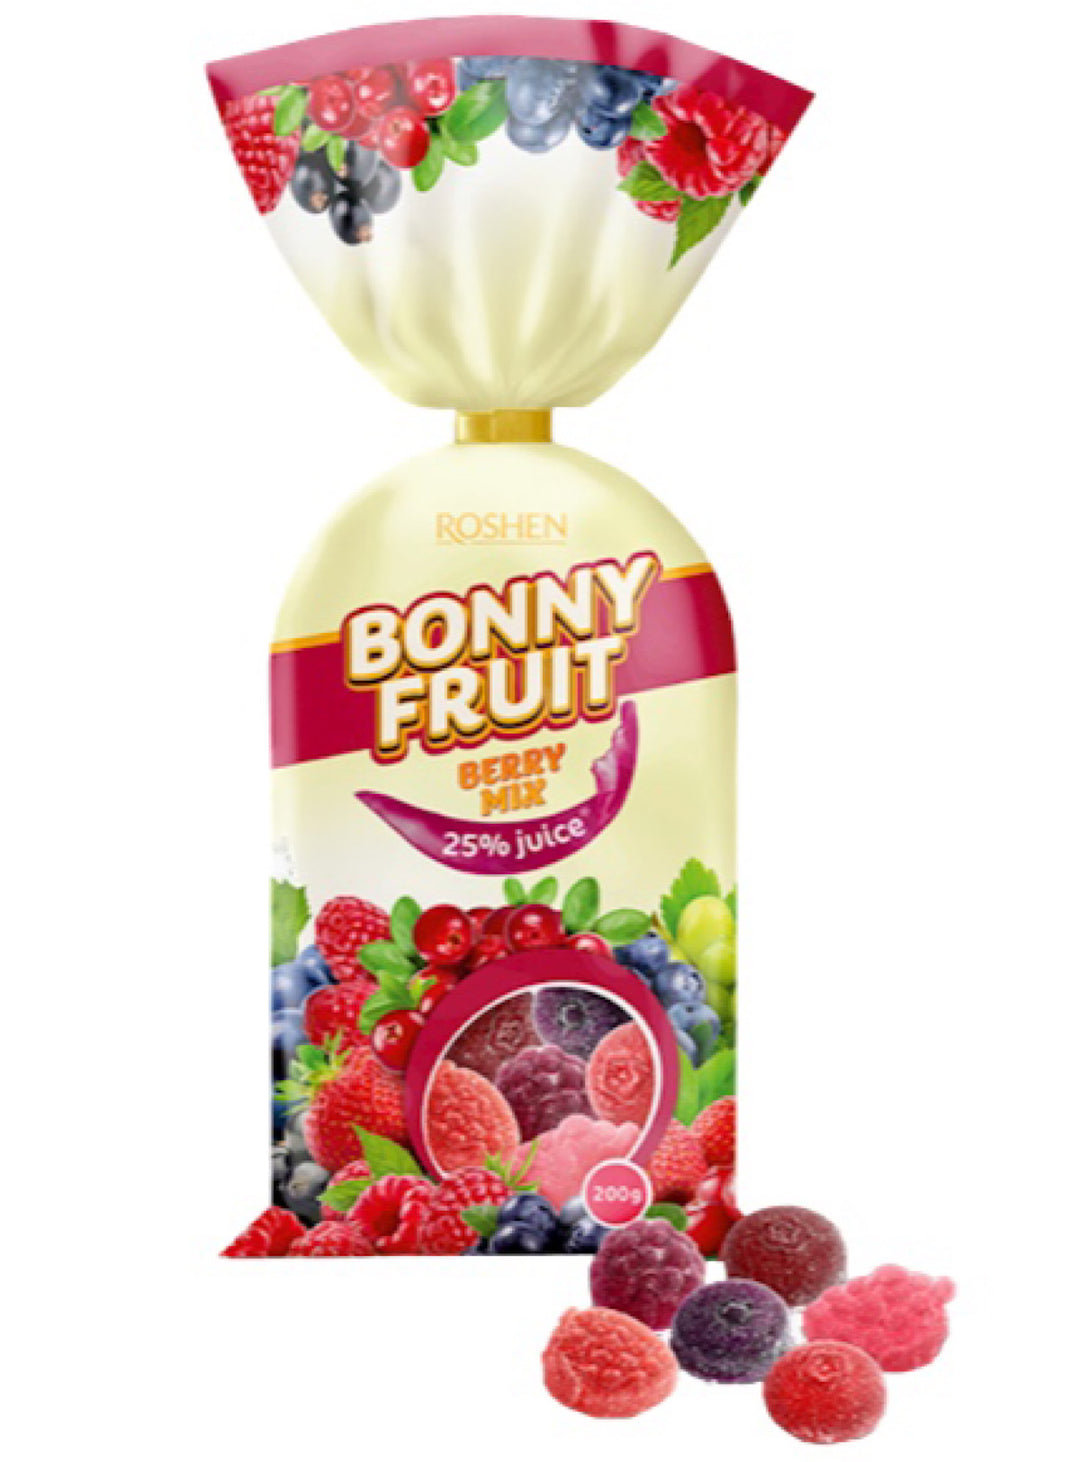 Bonny Fruit Jelly Candies berry mix - Roshen - 200G